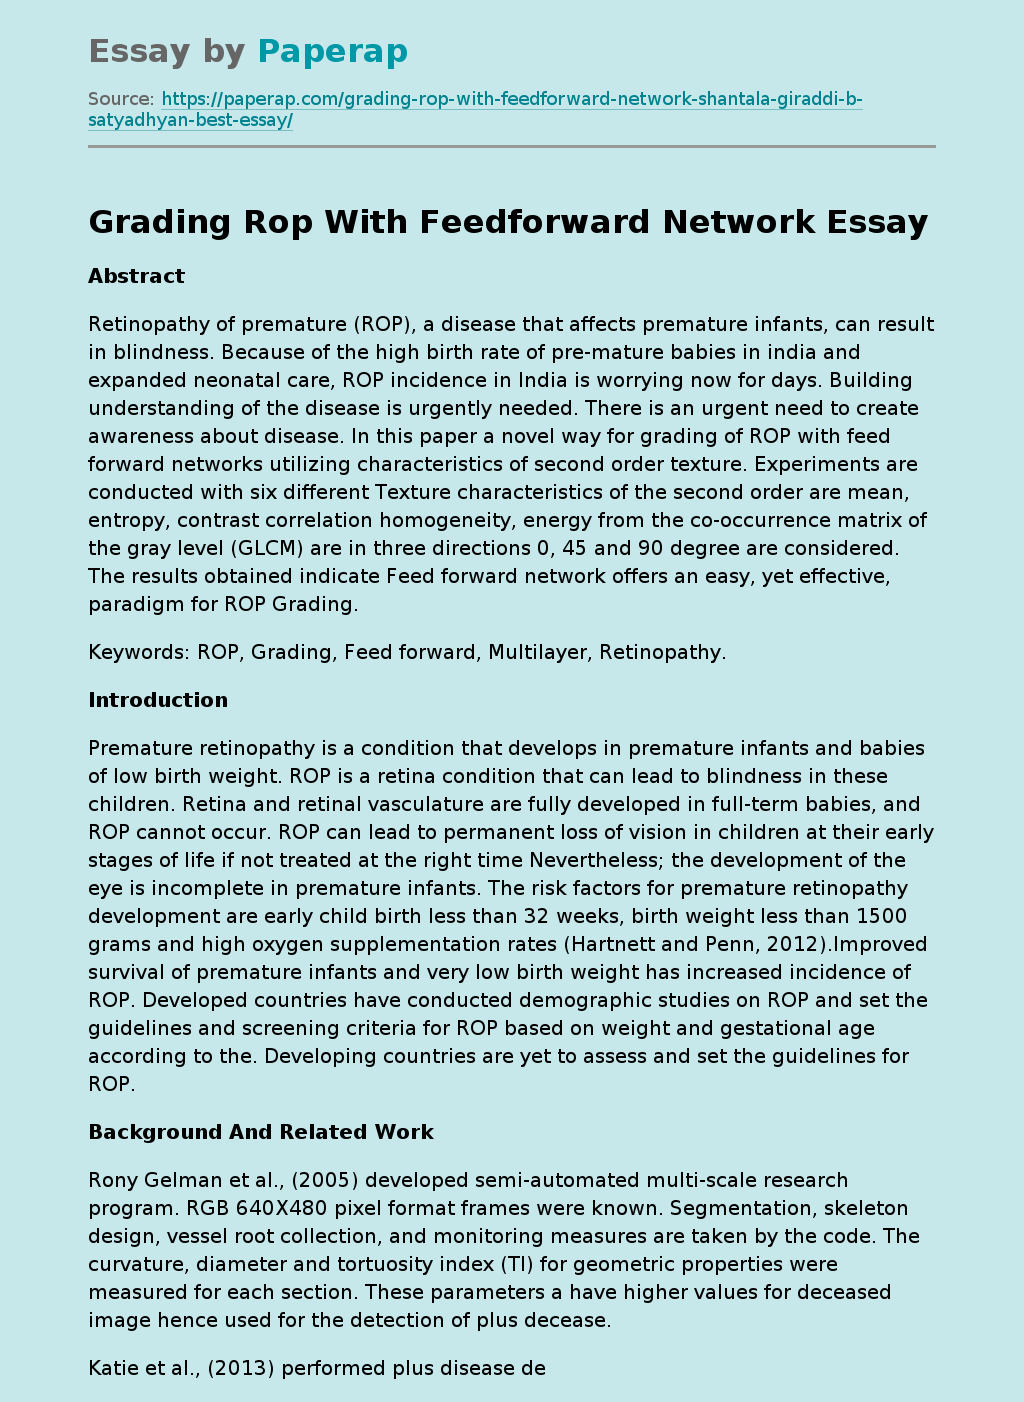 Grading Rop With Feedforward Network